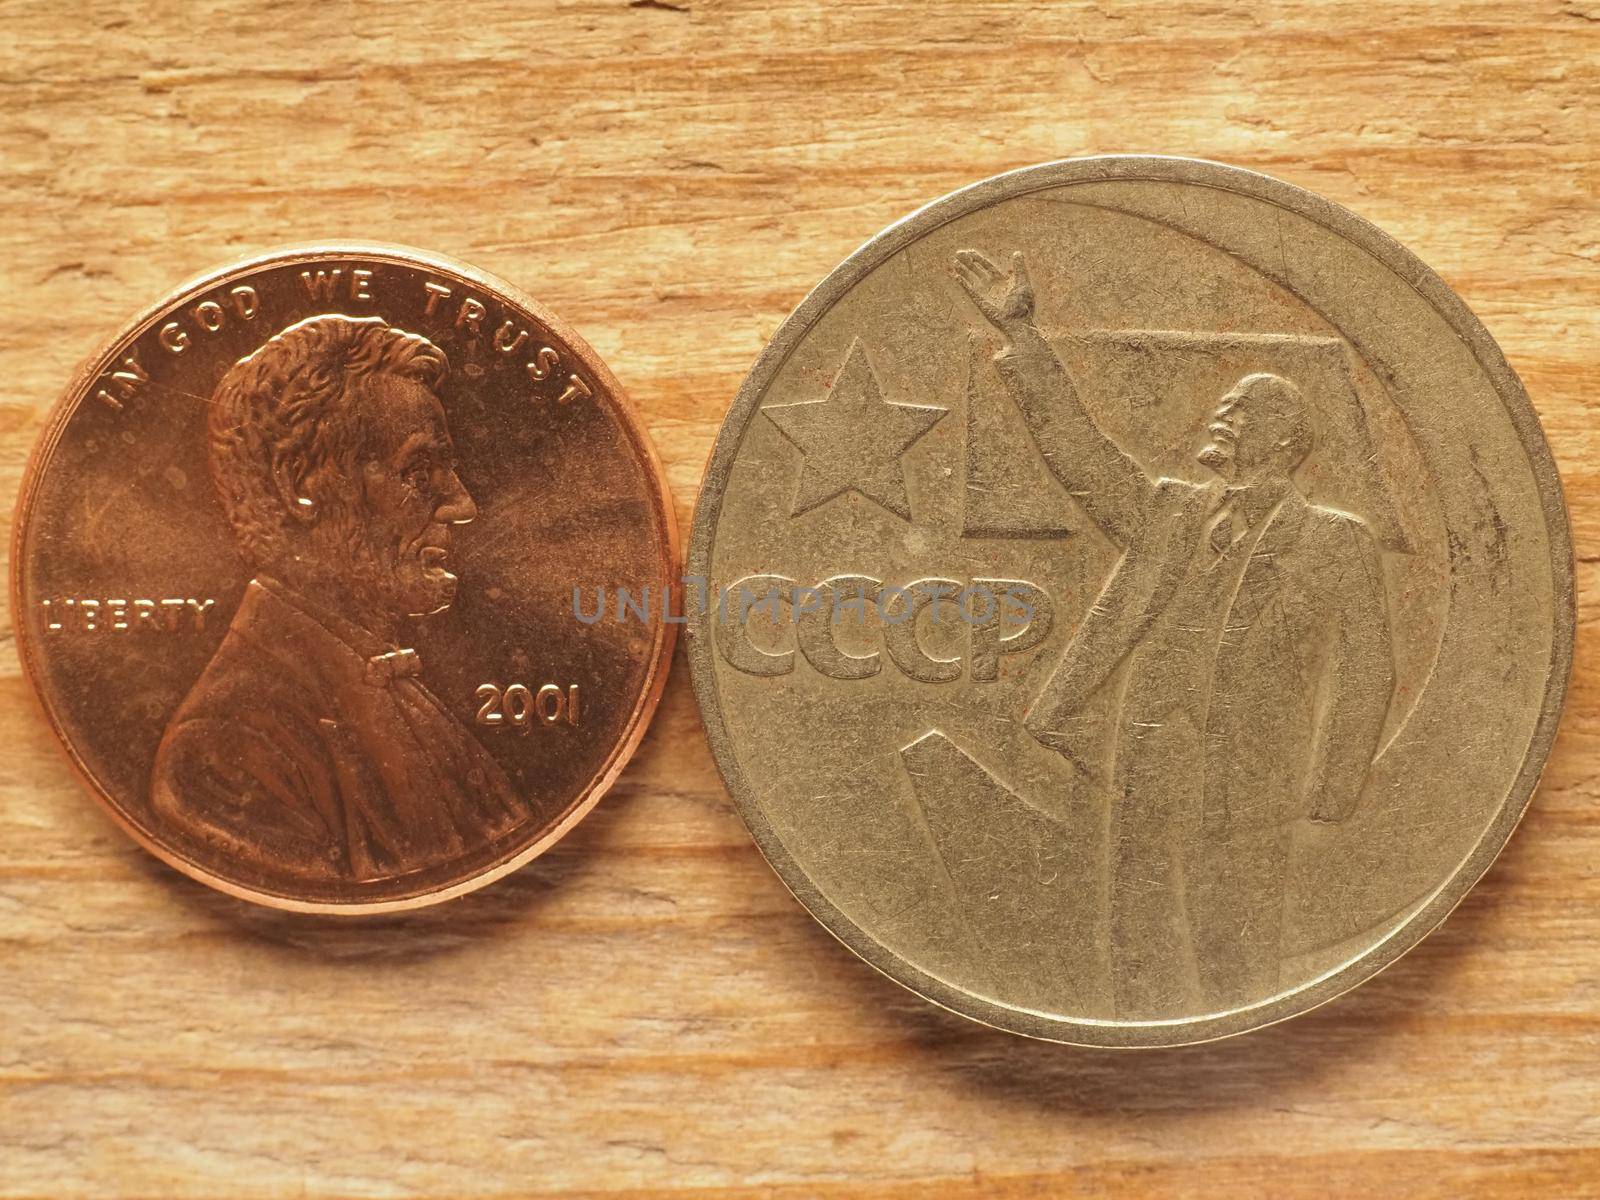 Abraham Lincoln and Vladimir Lenin on USA and CCCP coins